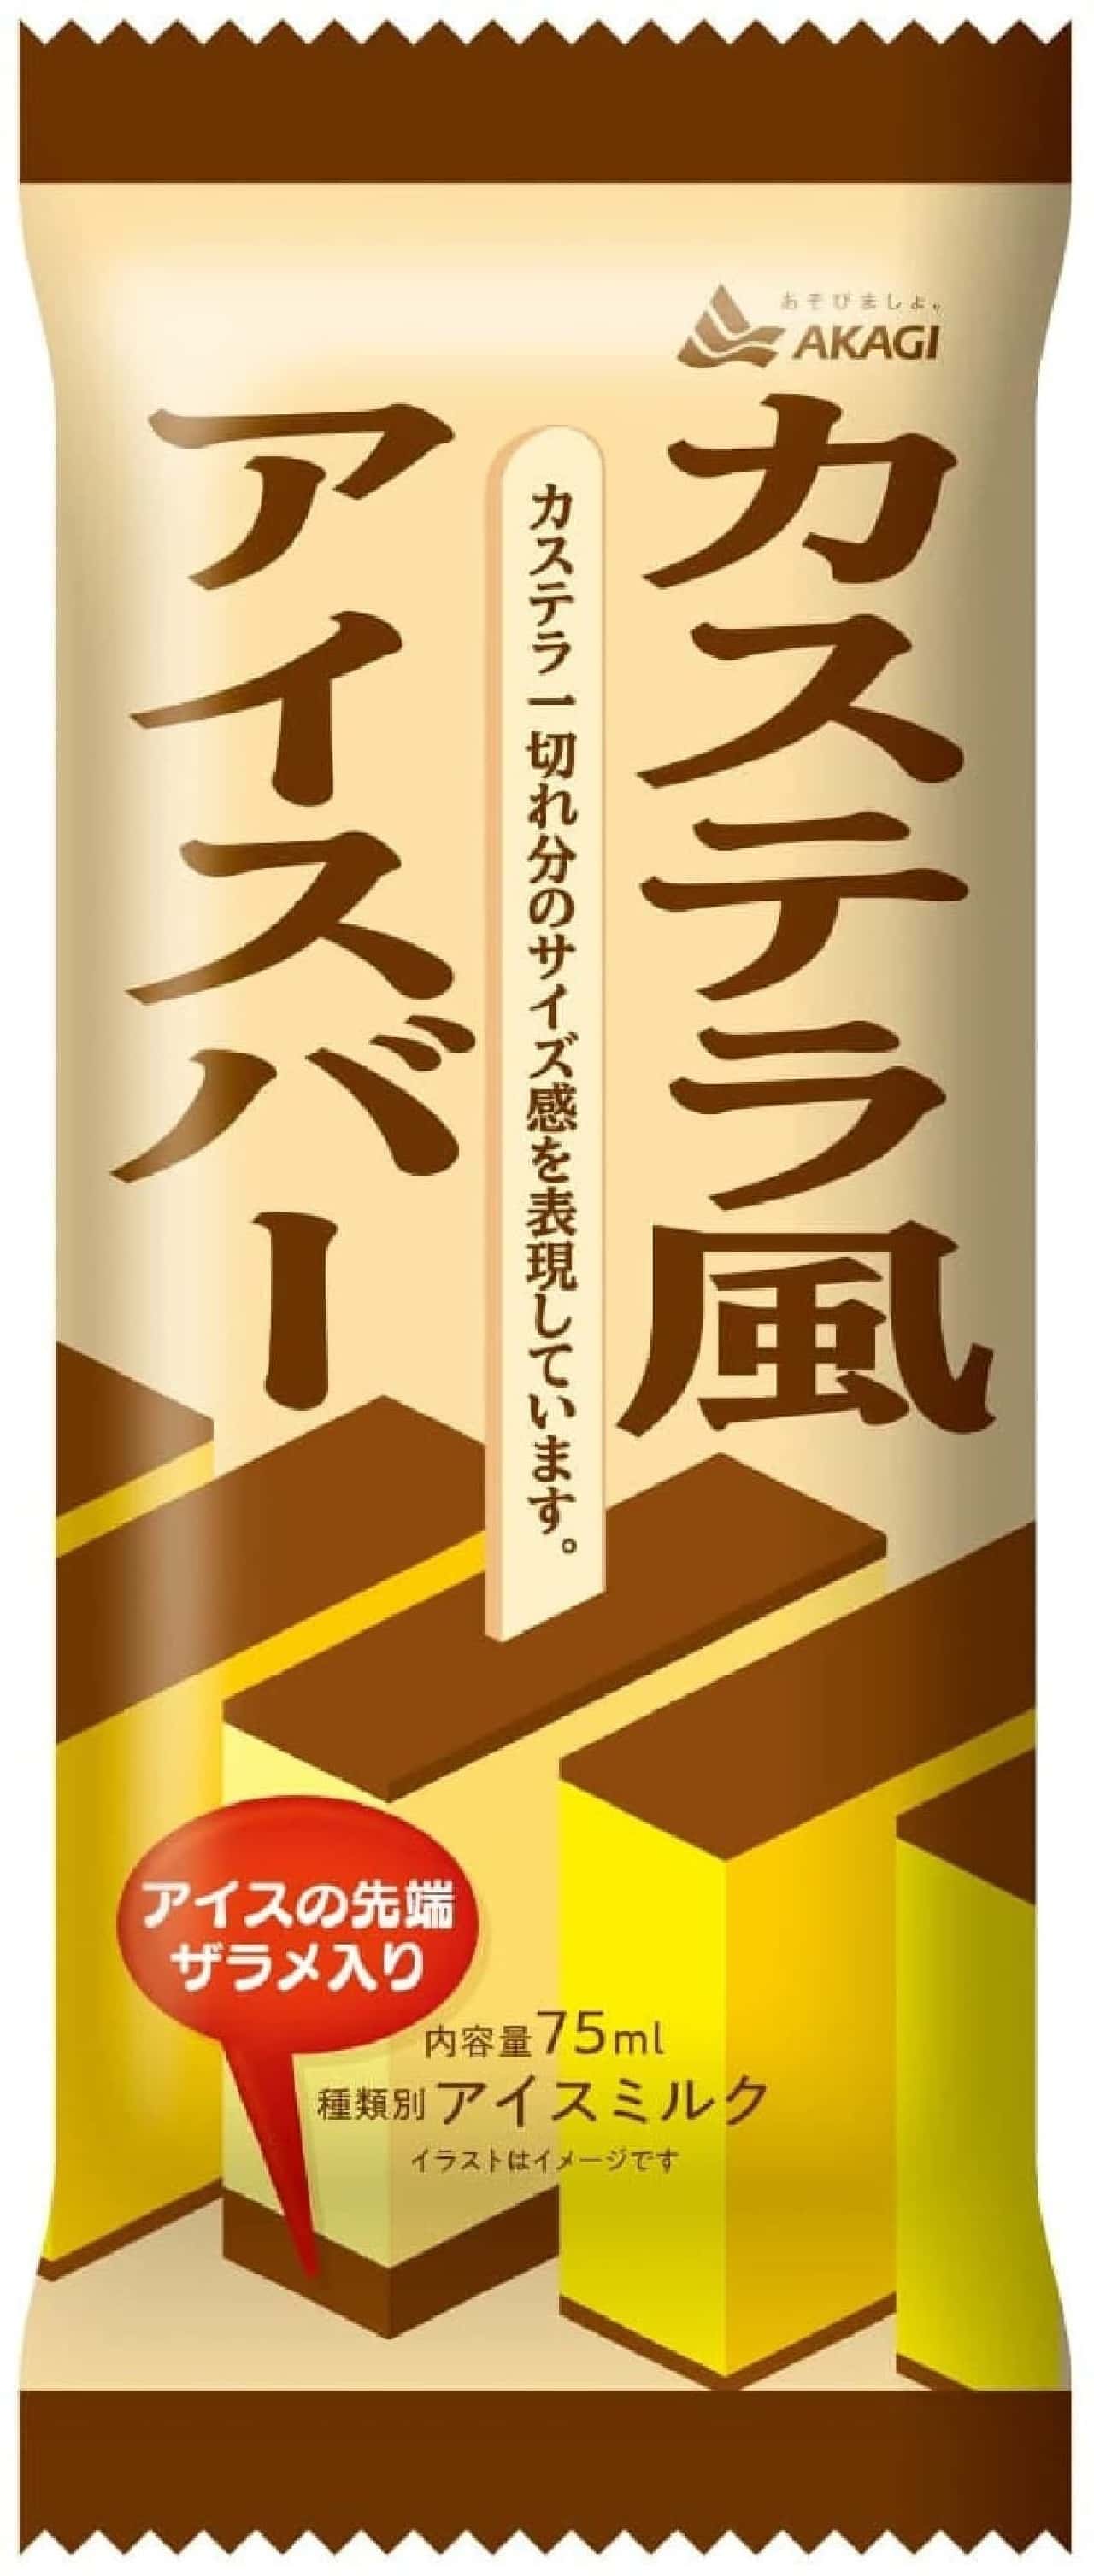 Akagi Nyugyo "Castella style ice cream bar